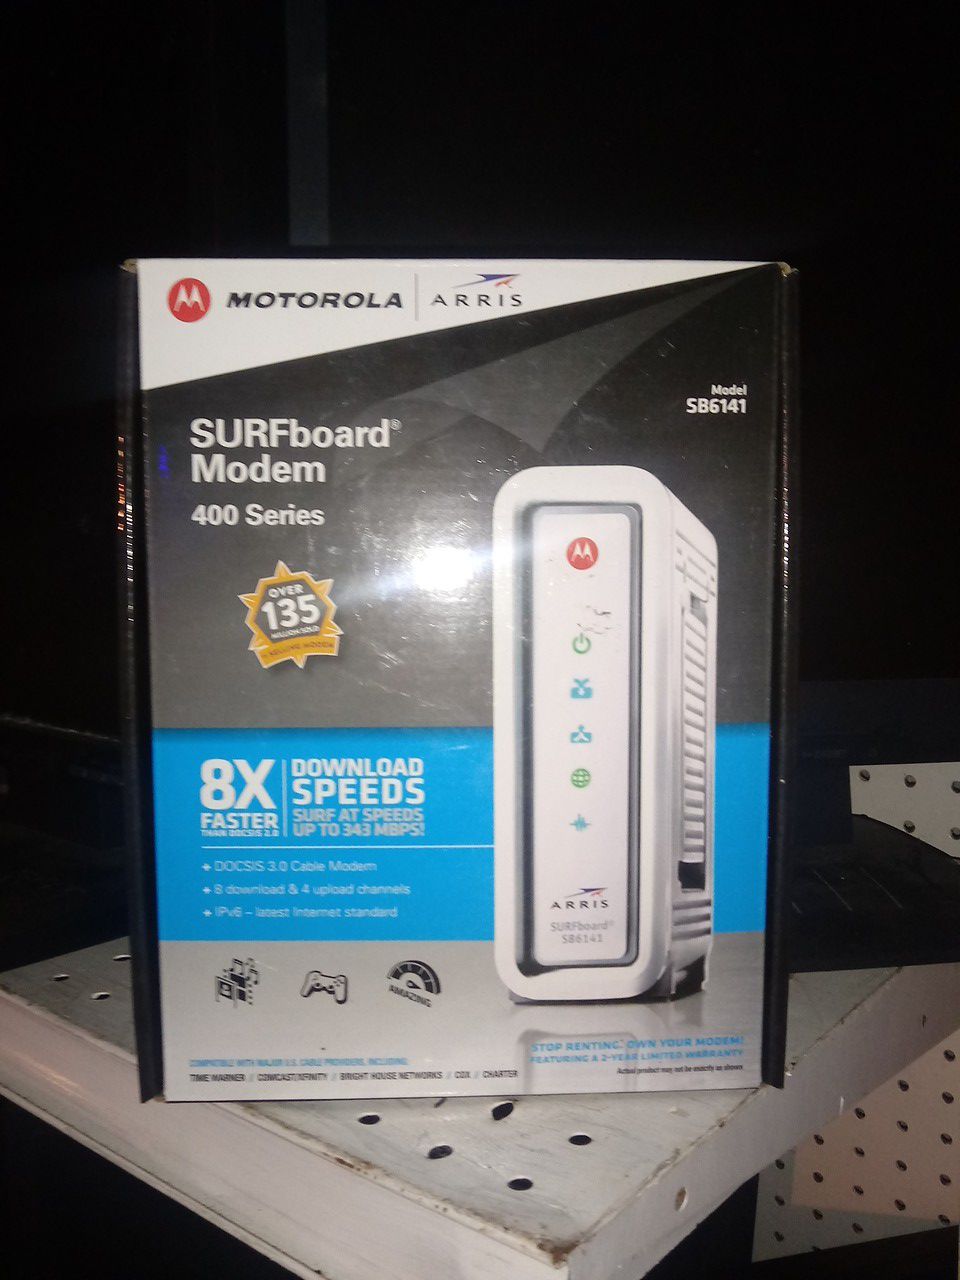 Motorola arris surfboard modem 400series